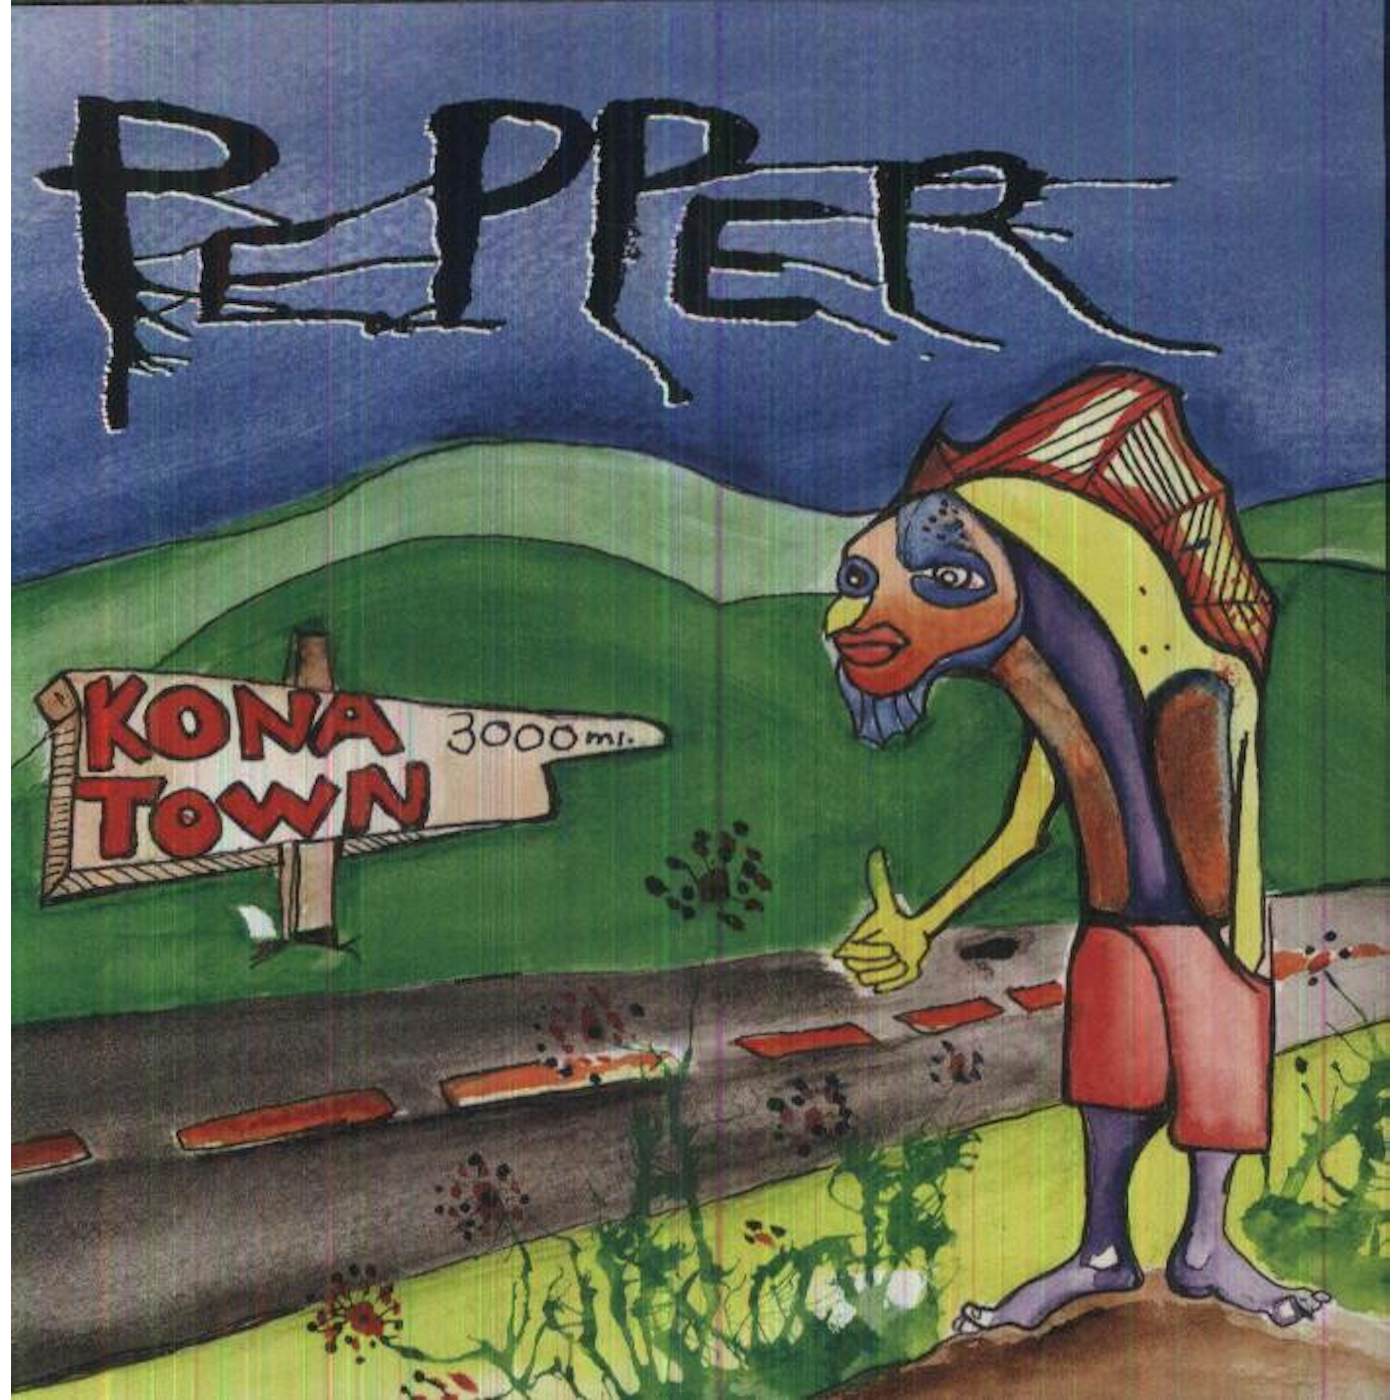 Pepper KONA TOWN CD